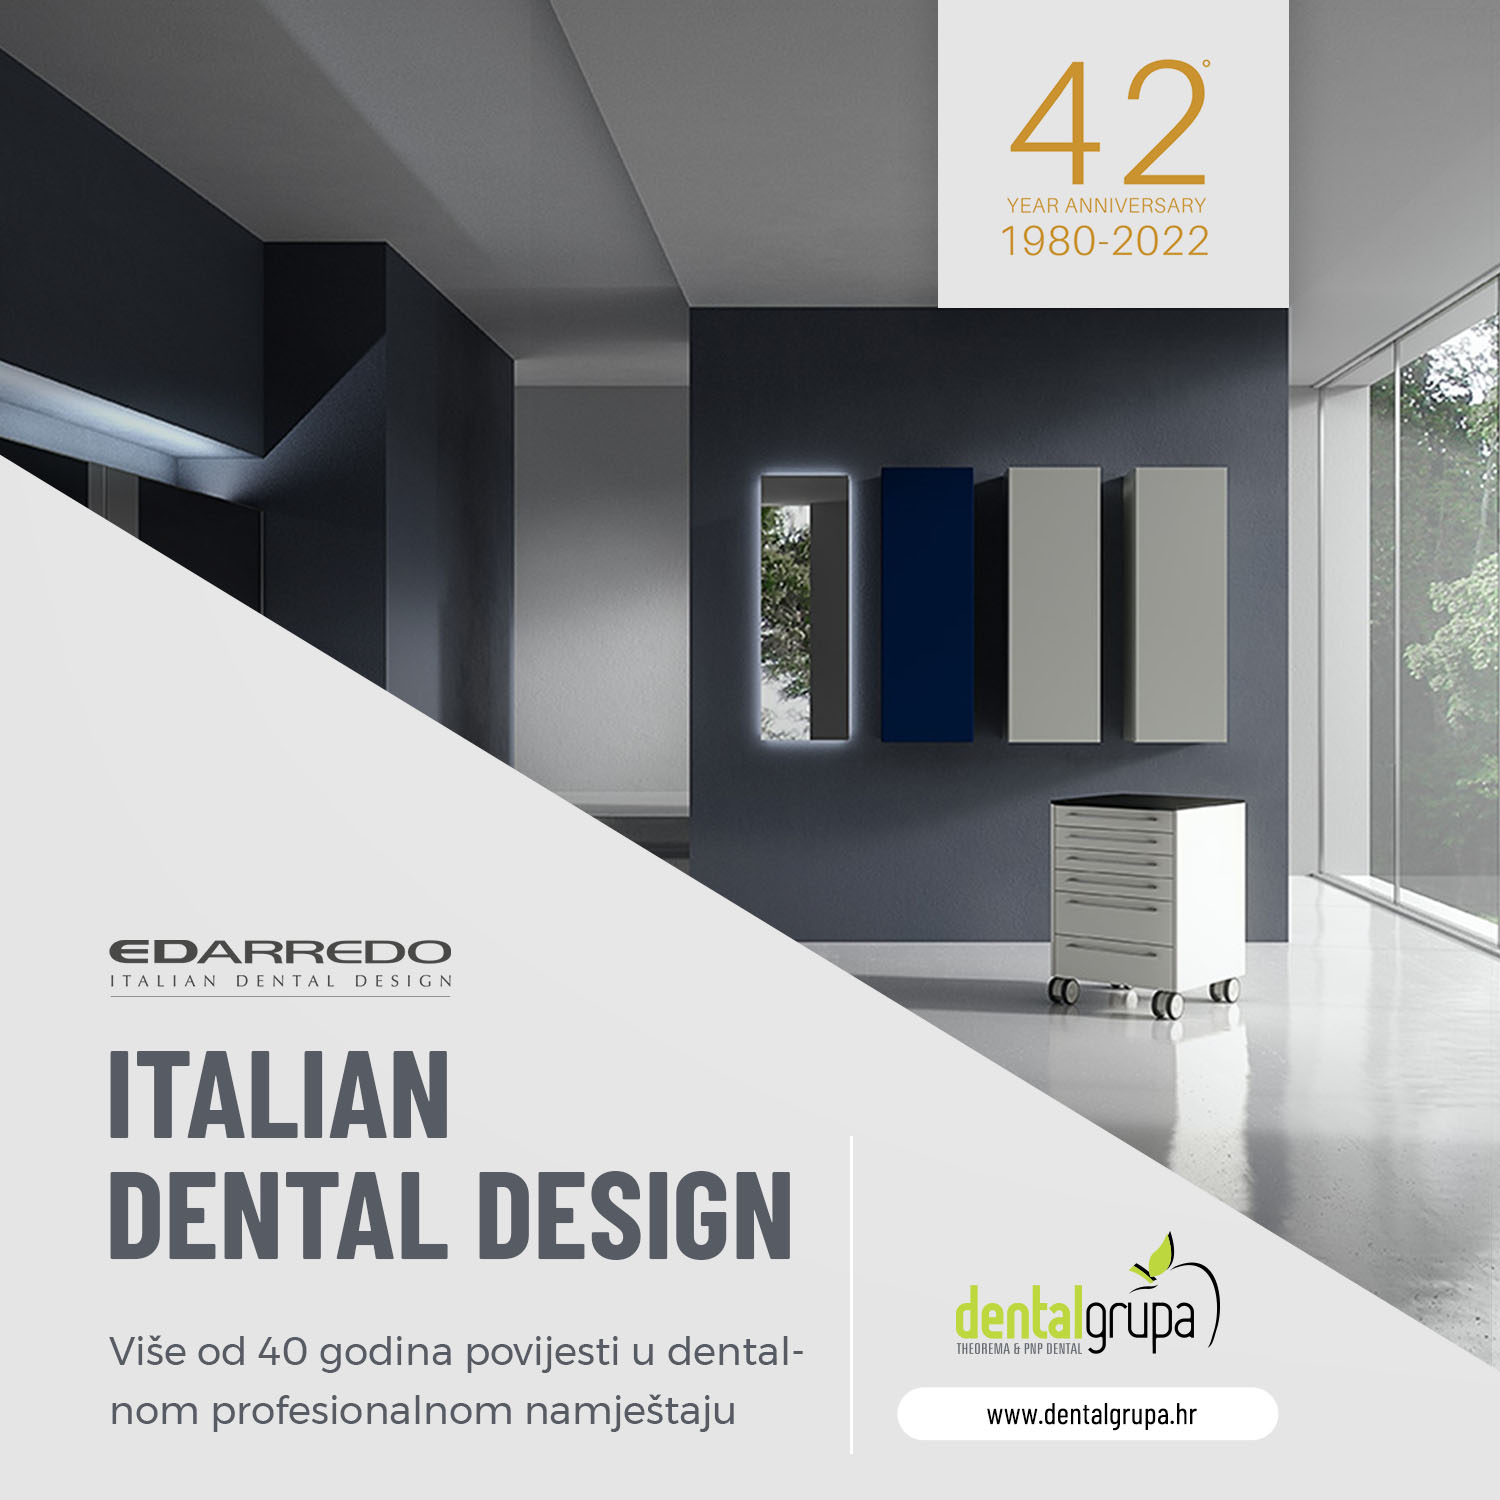 Edarredo - Italian Dental Design